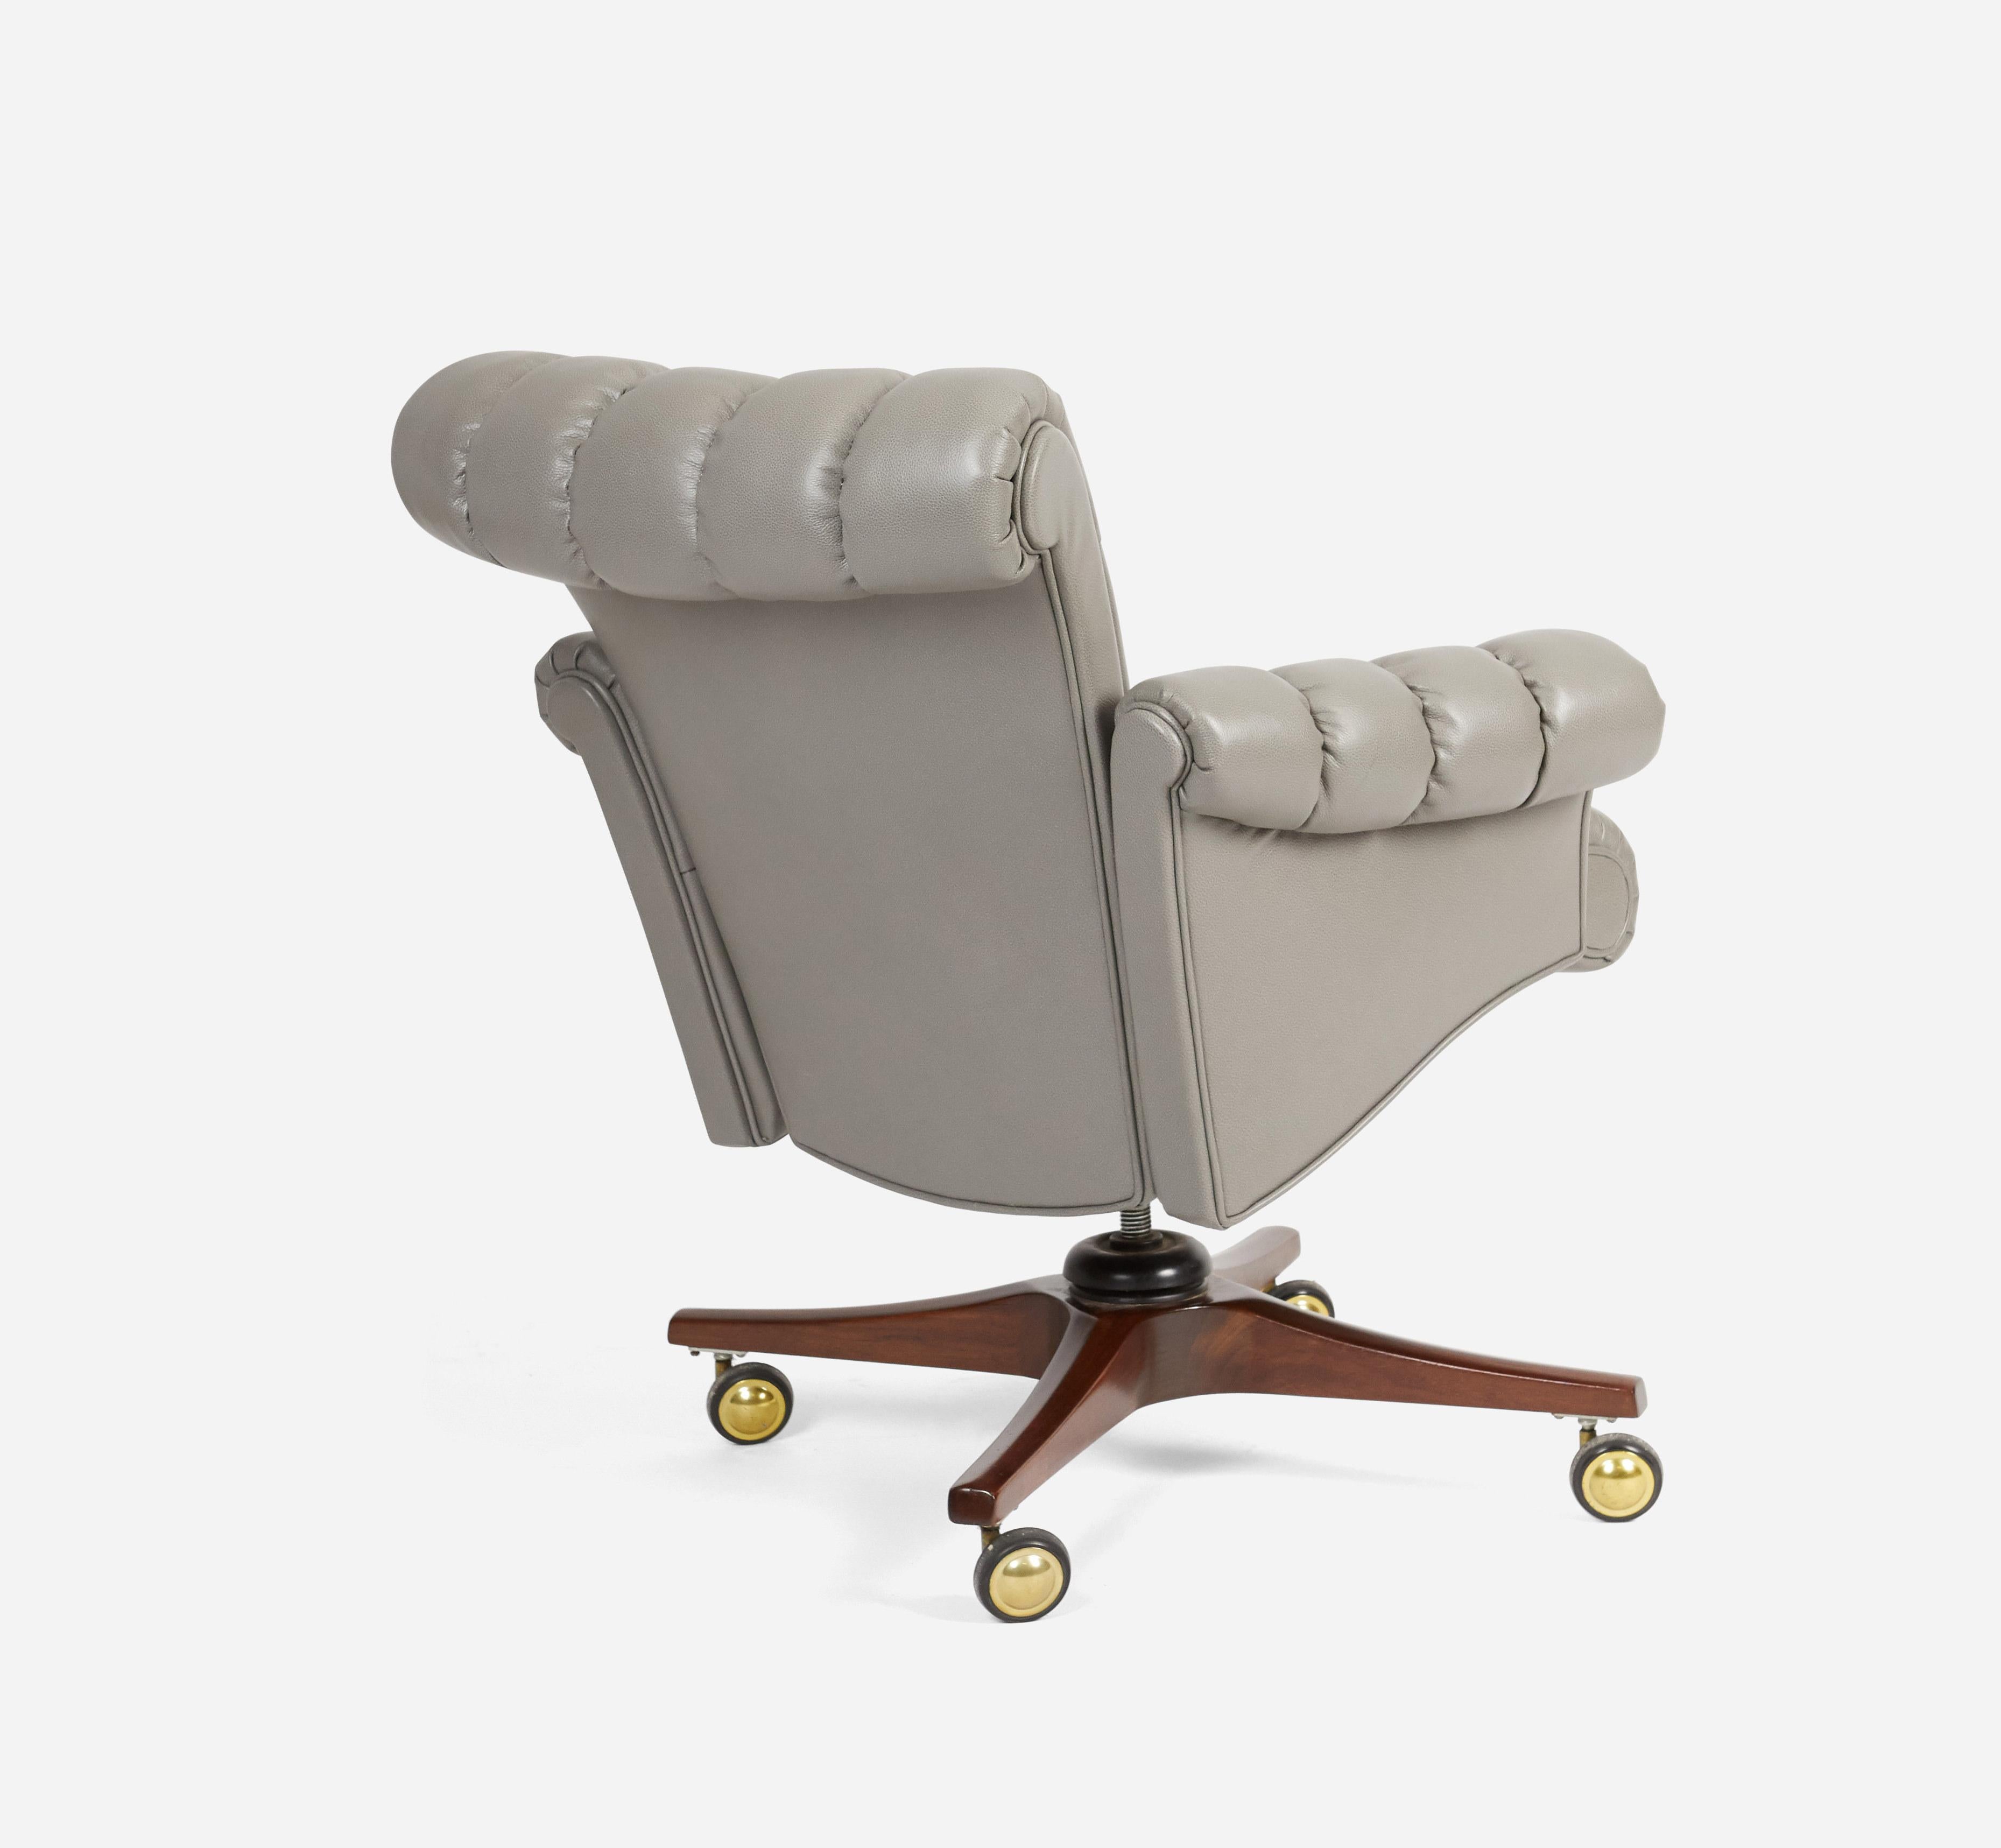 Executive desk chair, Dunbar model 932 